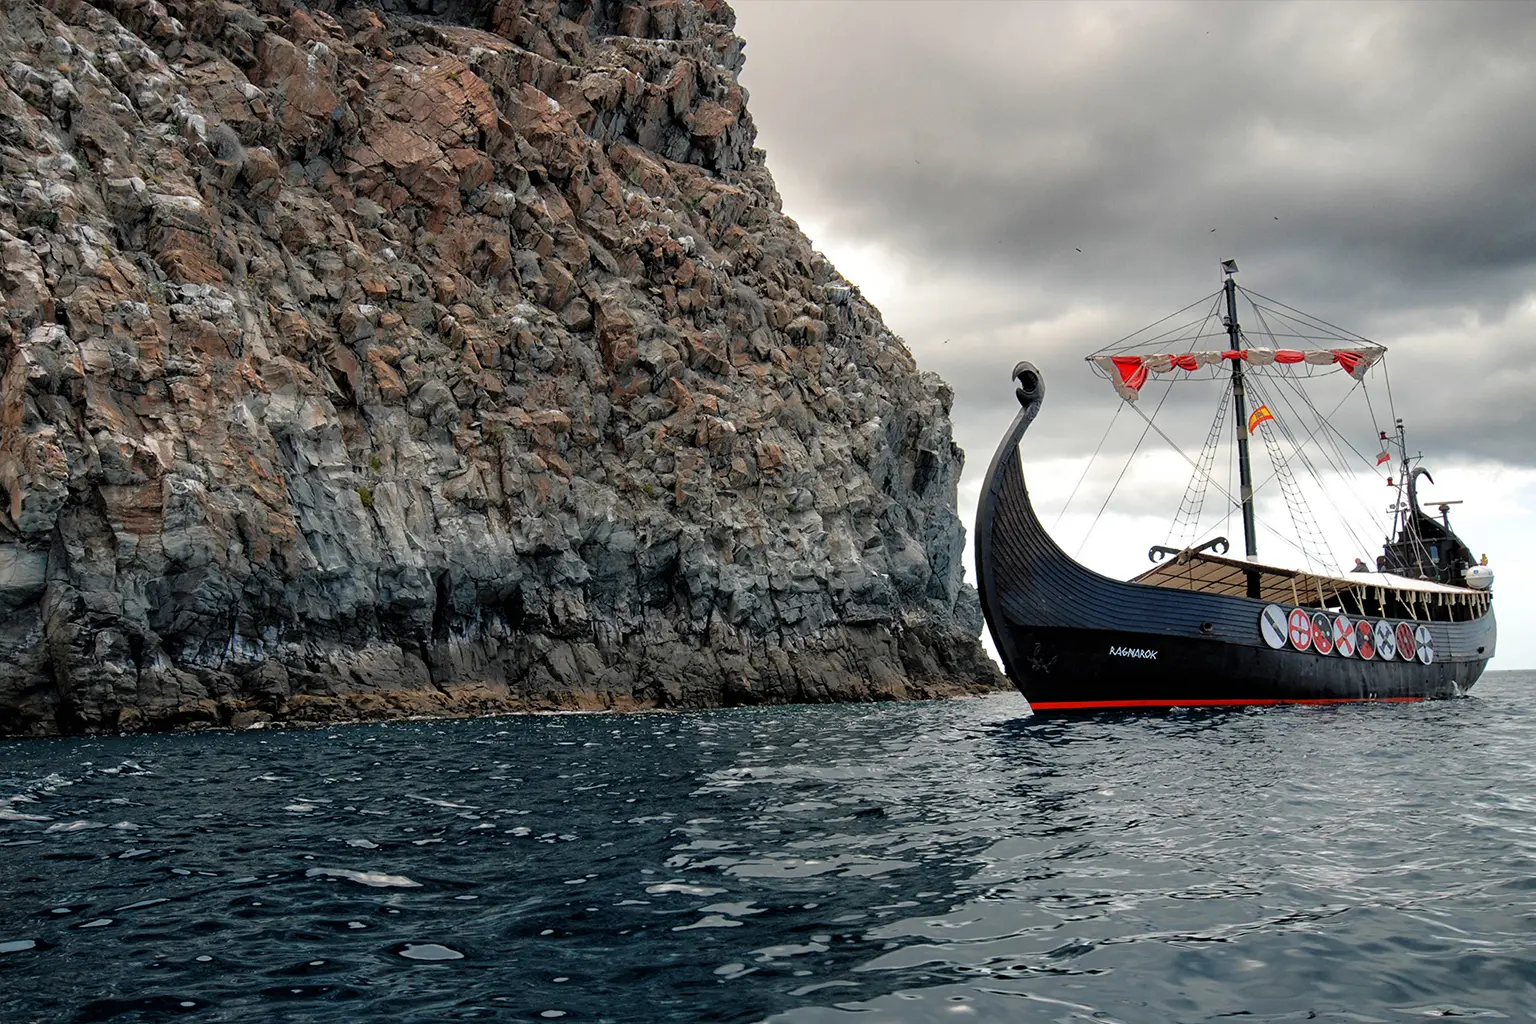 Viking boat trip in Tenerife